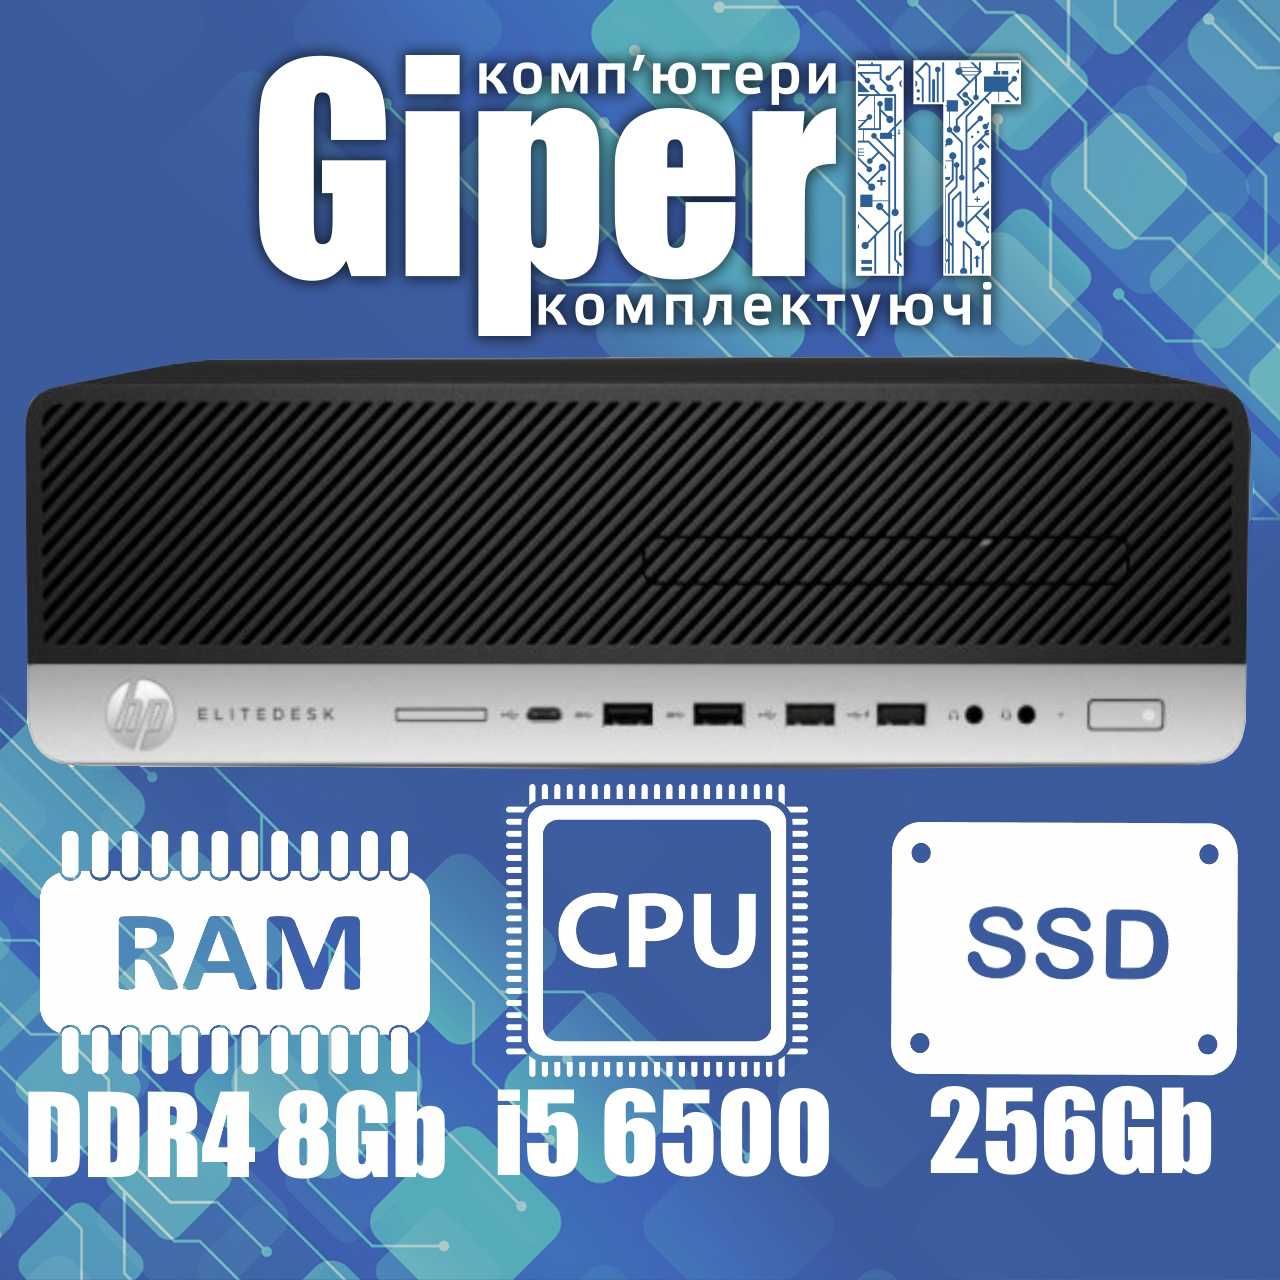 Комп'ютер HP ElitDesk 800 G3 SFF (i5 6500, DDR4 8Gb, 256Gb SSD)